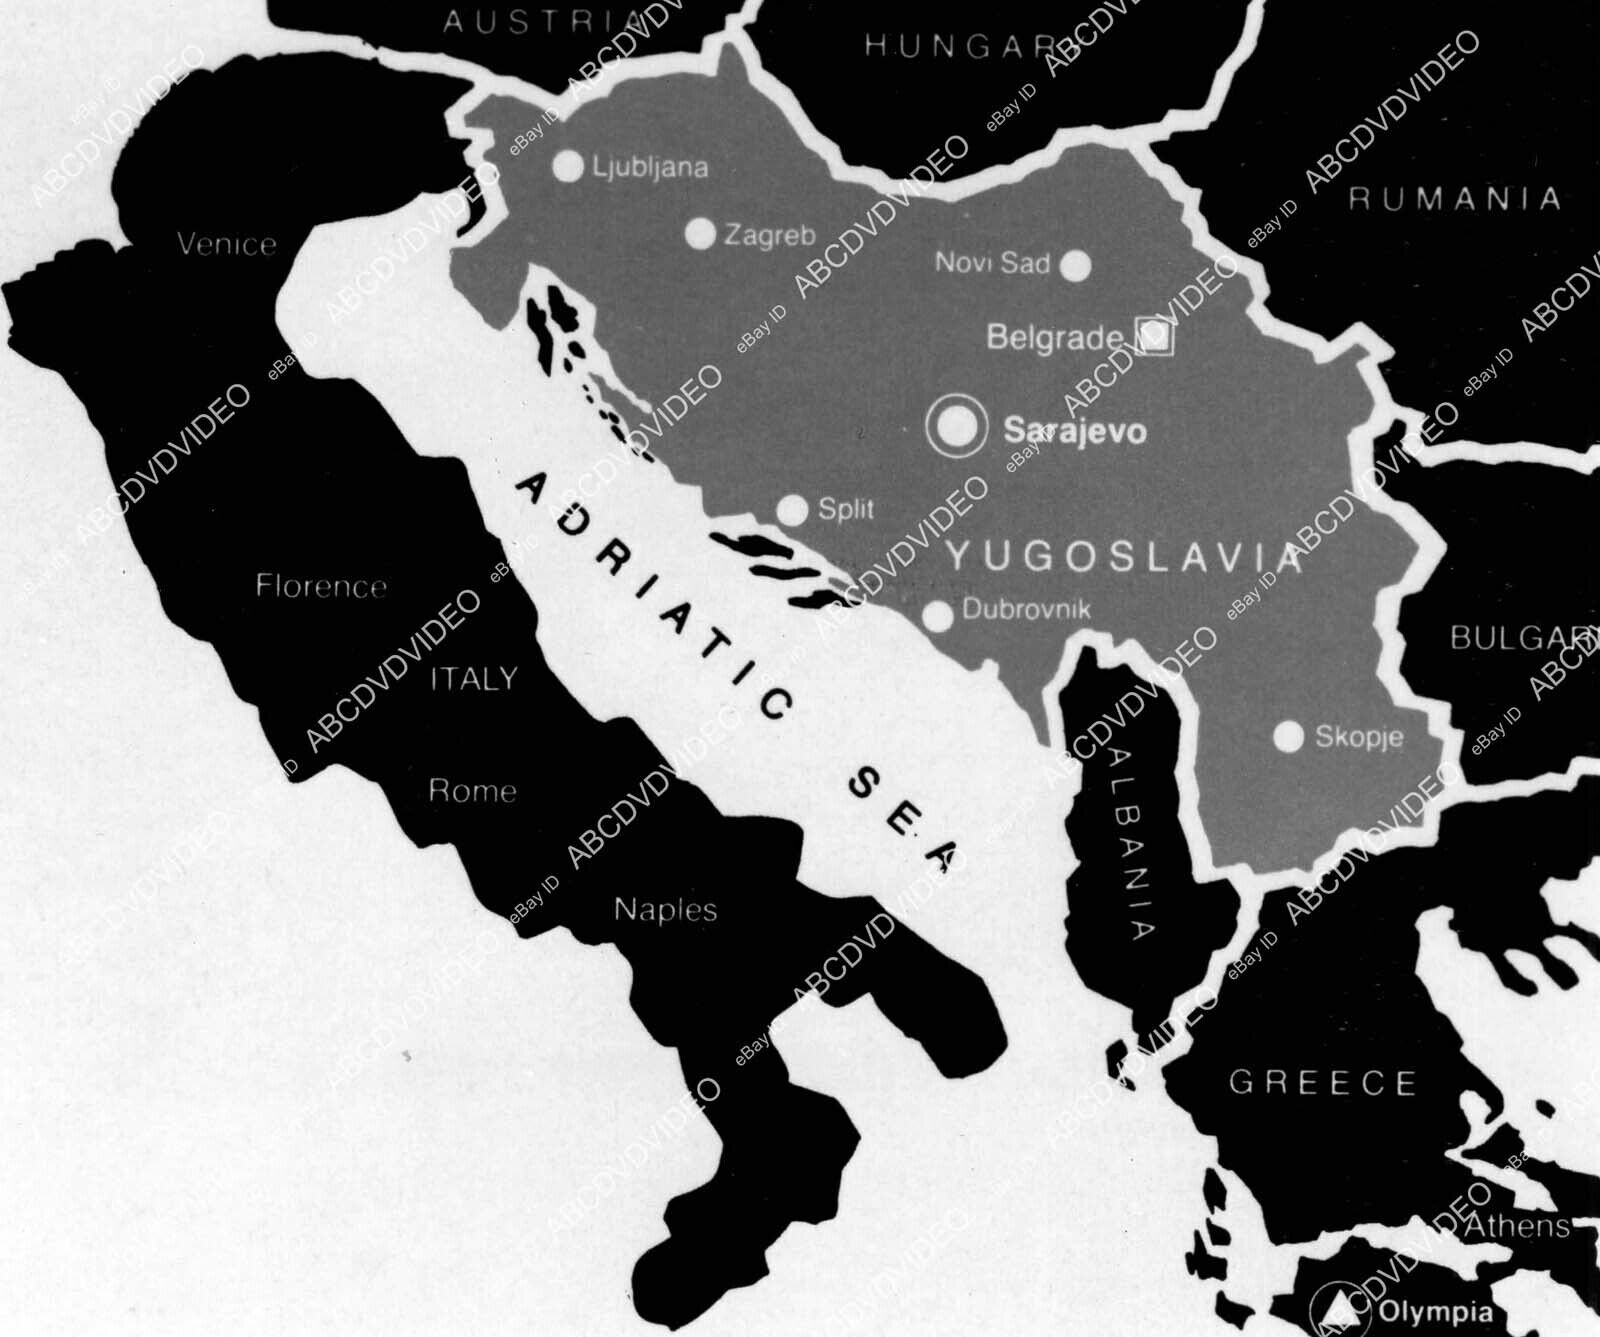 crp-69742 1984 Sarajevo Olympic games map Yugoslavia crp-69742